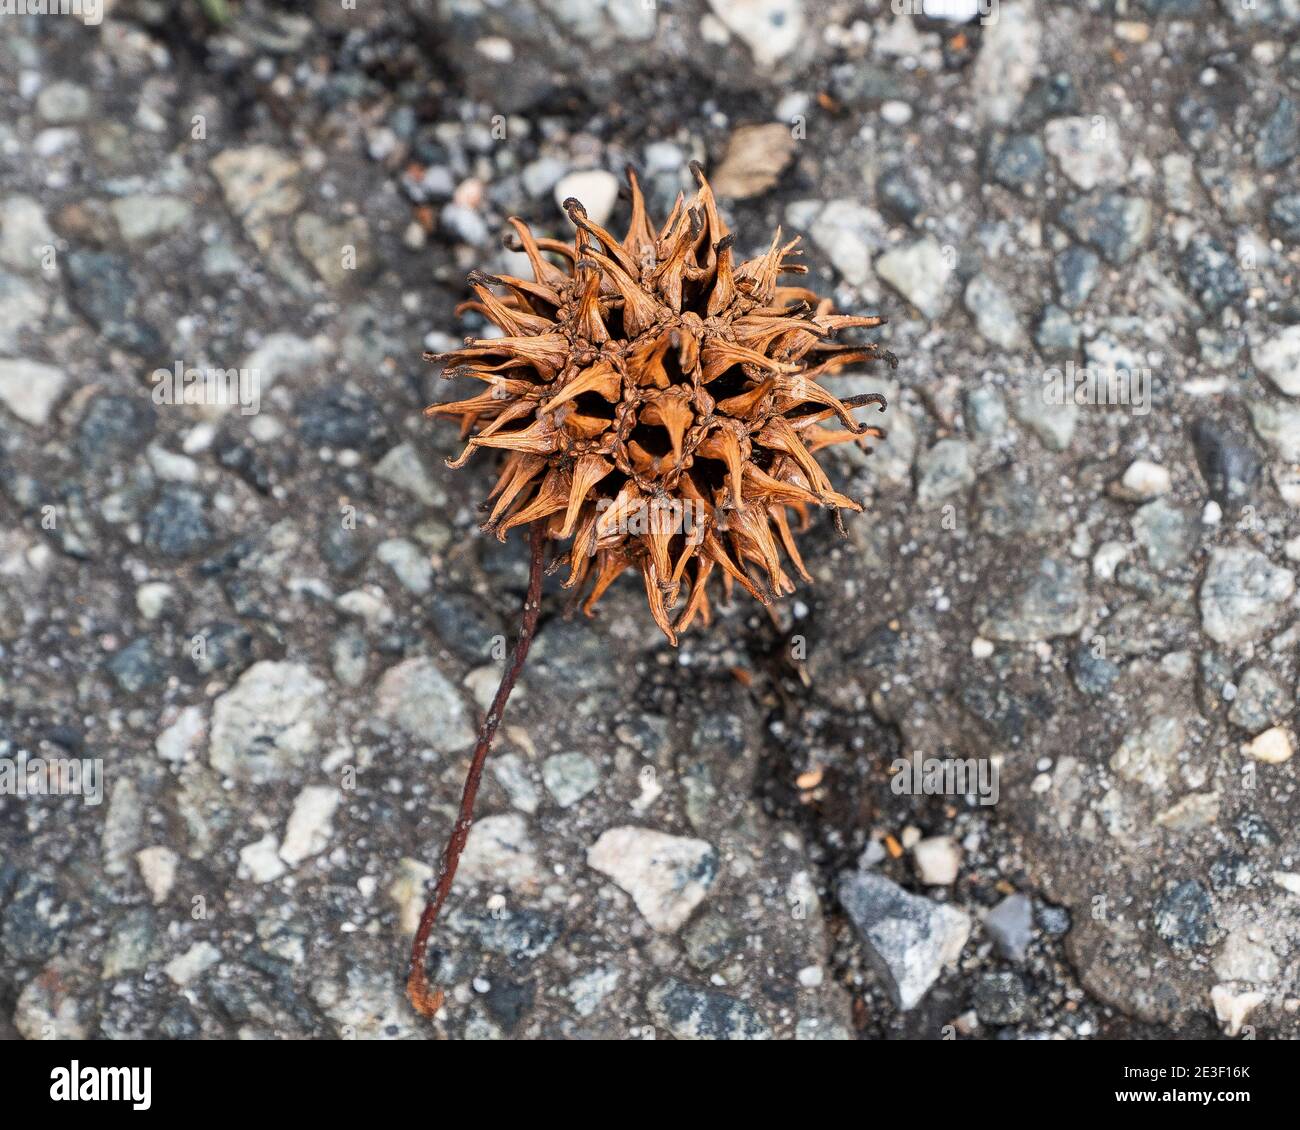 Spiky Sweet Gum Tree ball seen on asphalt ground. Stock Photo